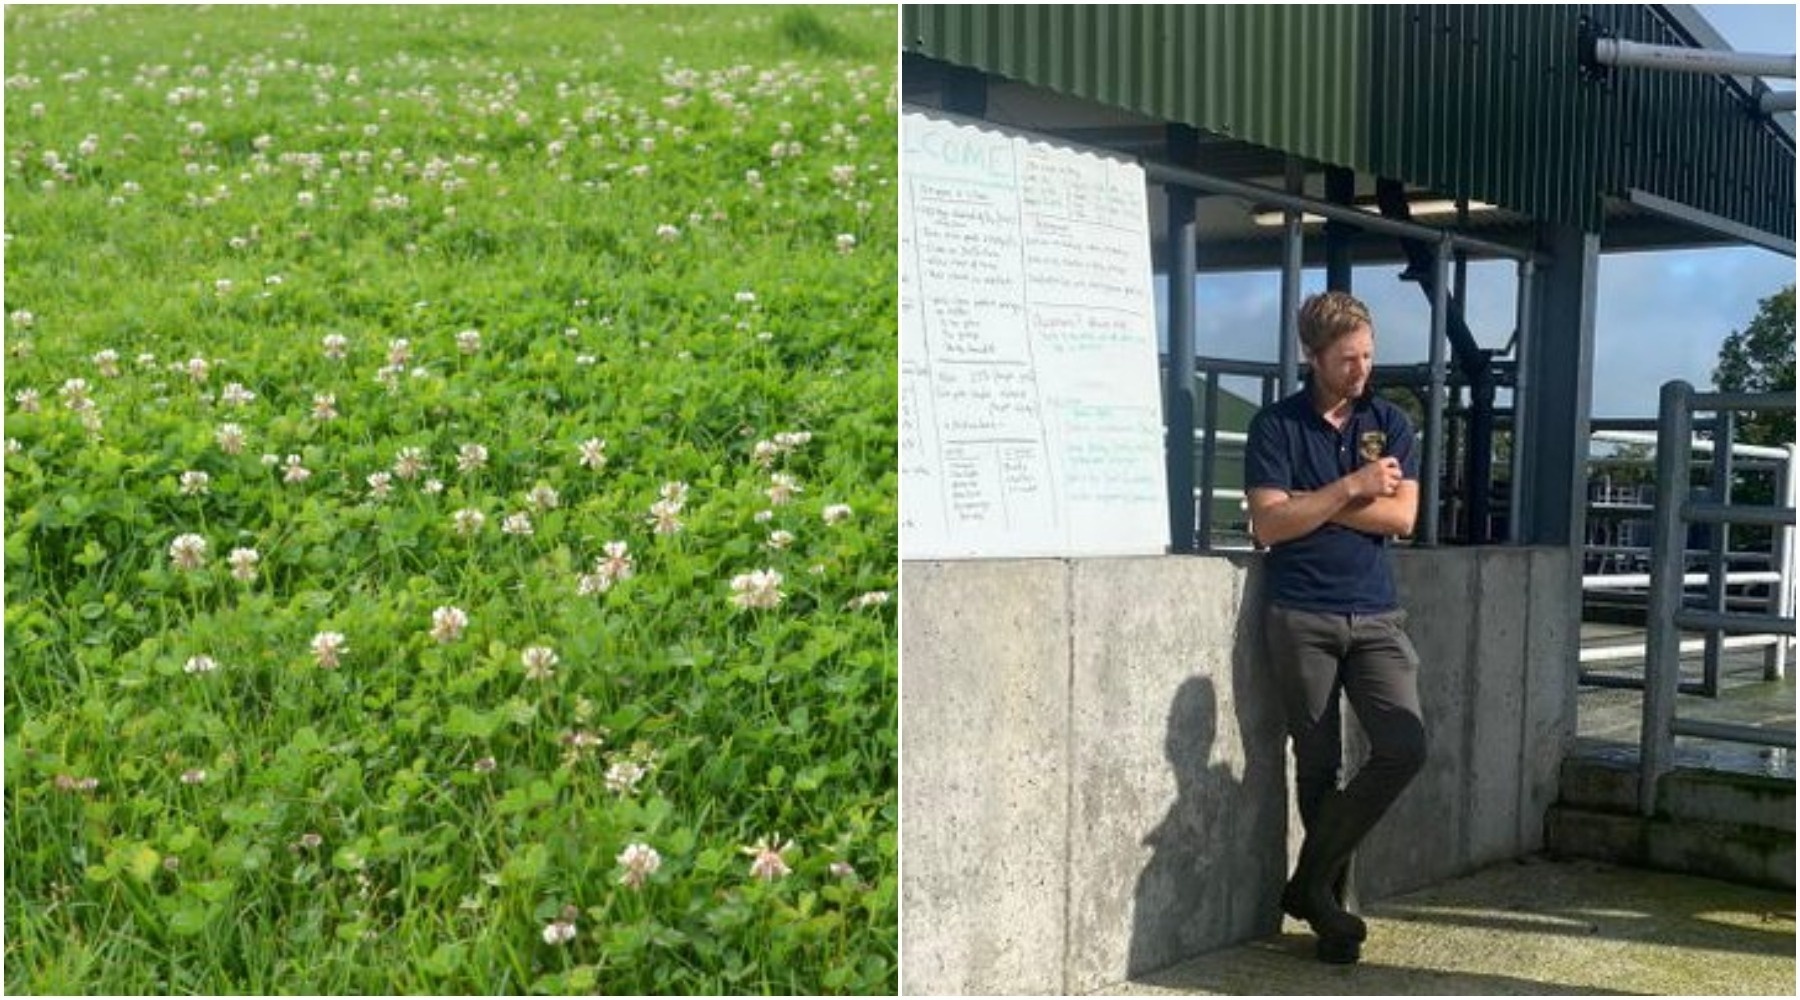 Limerick clover farm - FarmerColin Doherty grows clover as part of grass management on his 270-acre farm